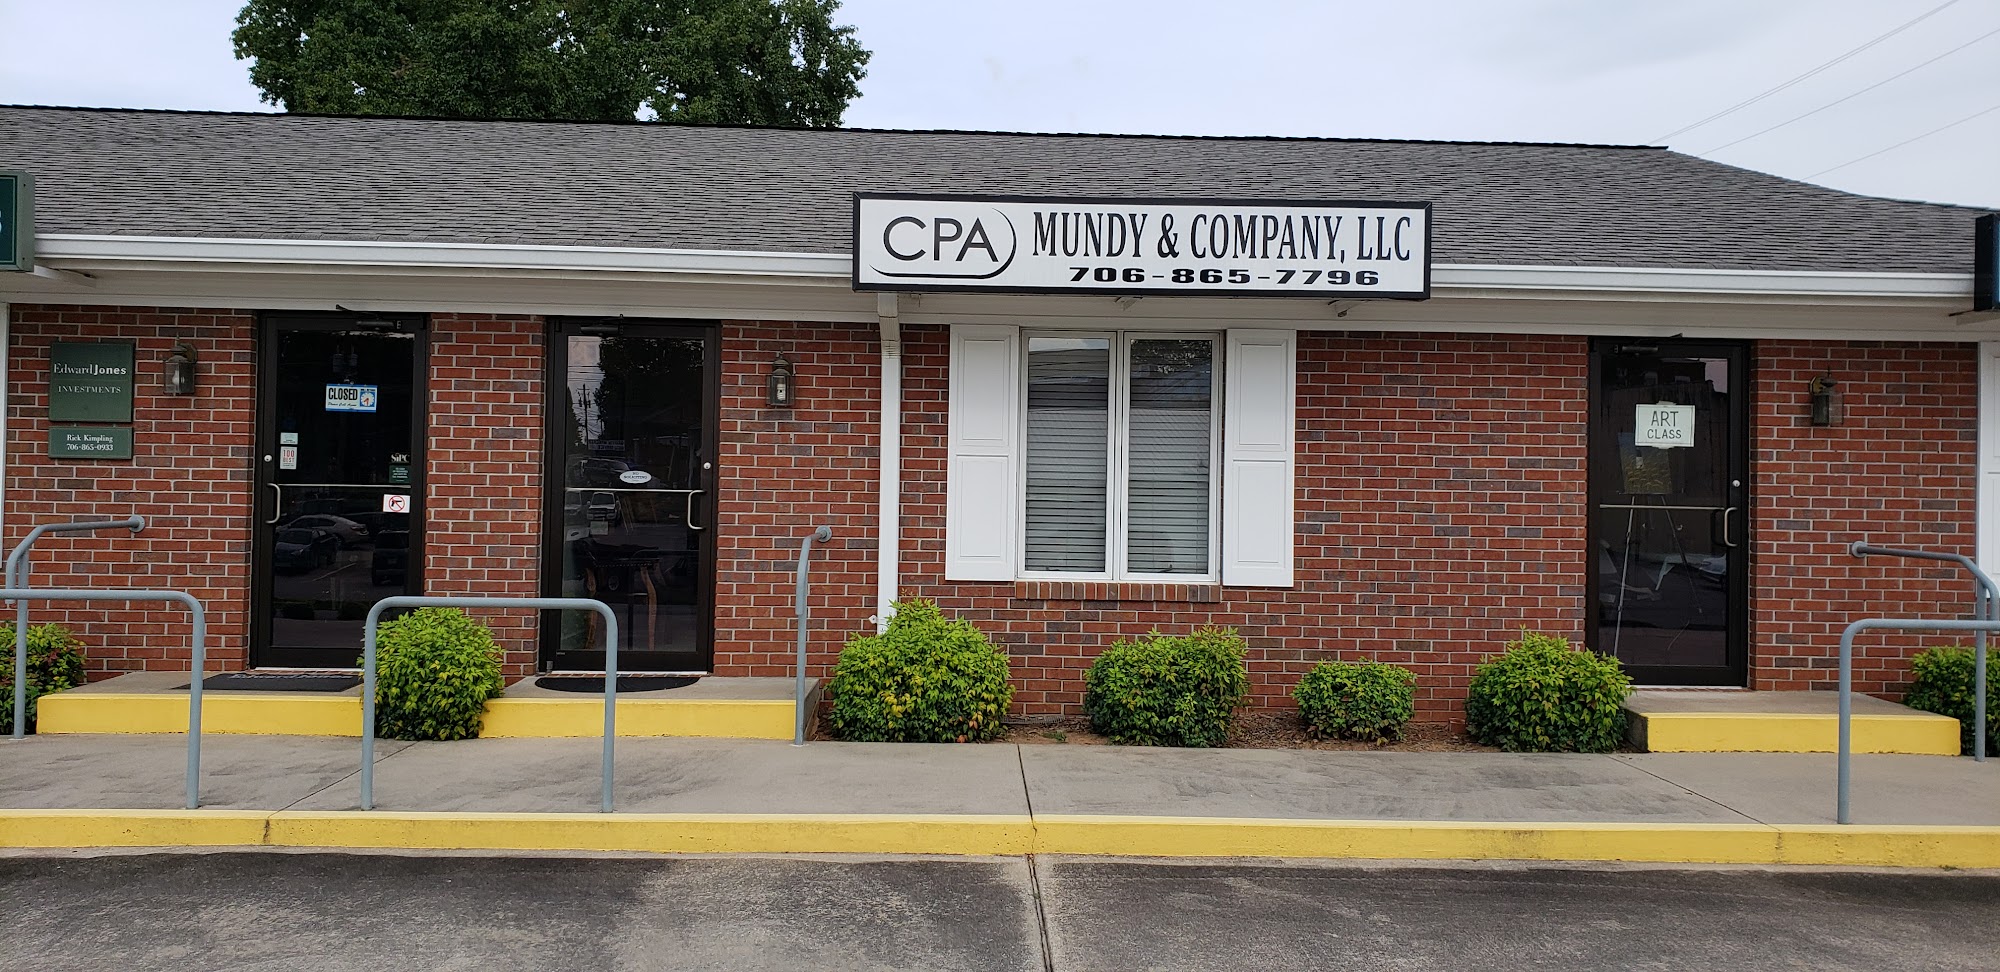 Mundy & Company, LLC